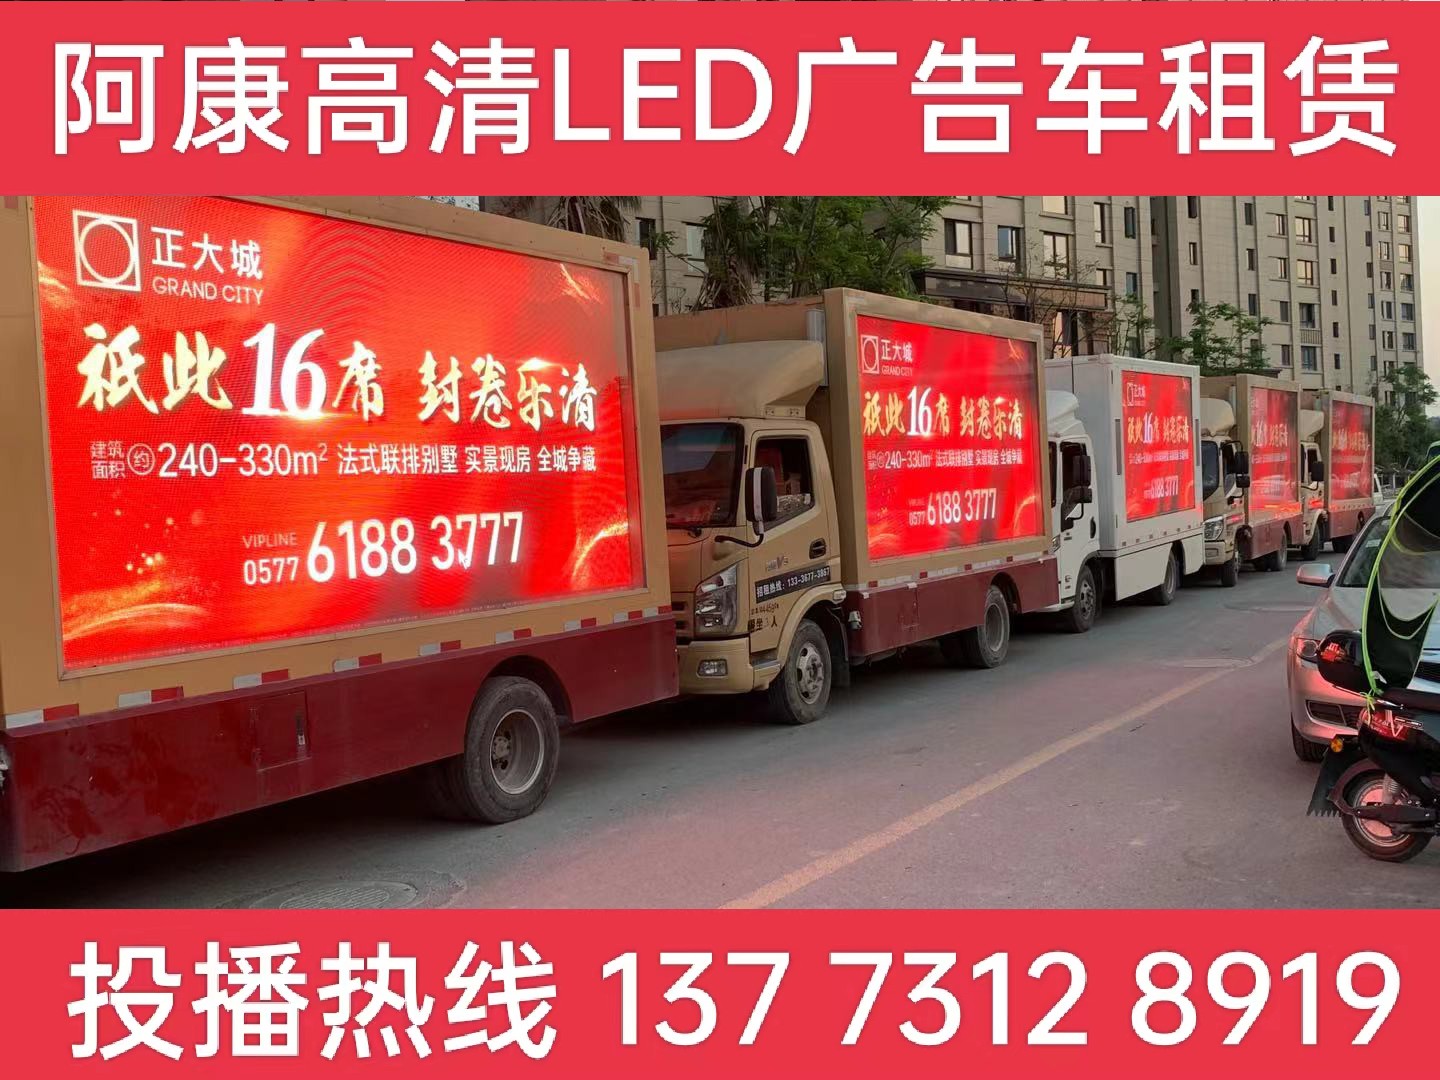 LED广告车出租